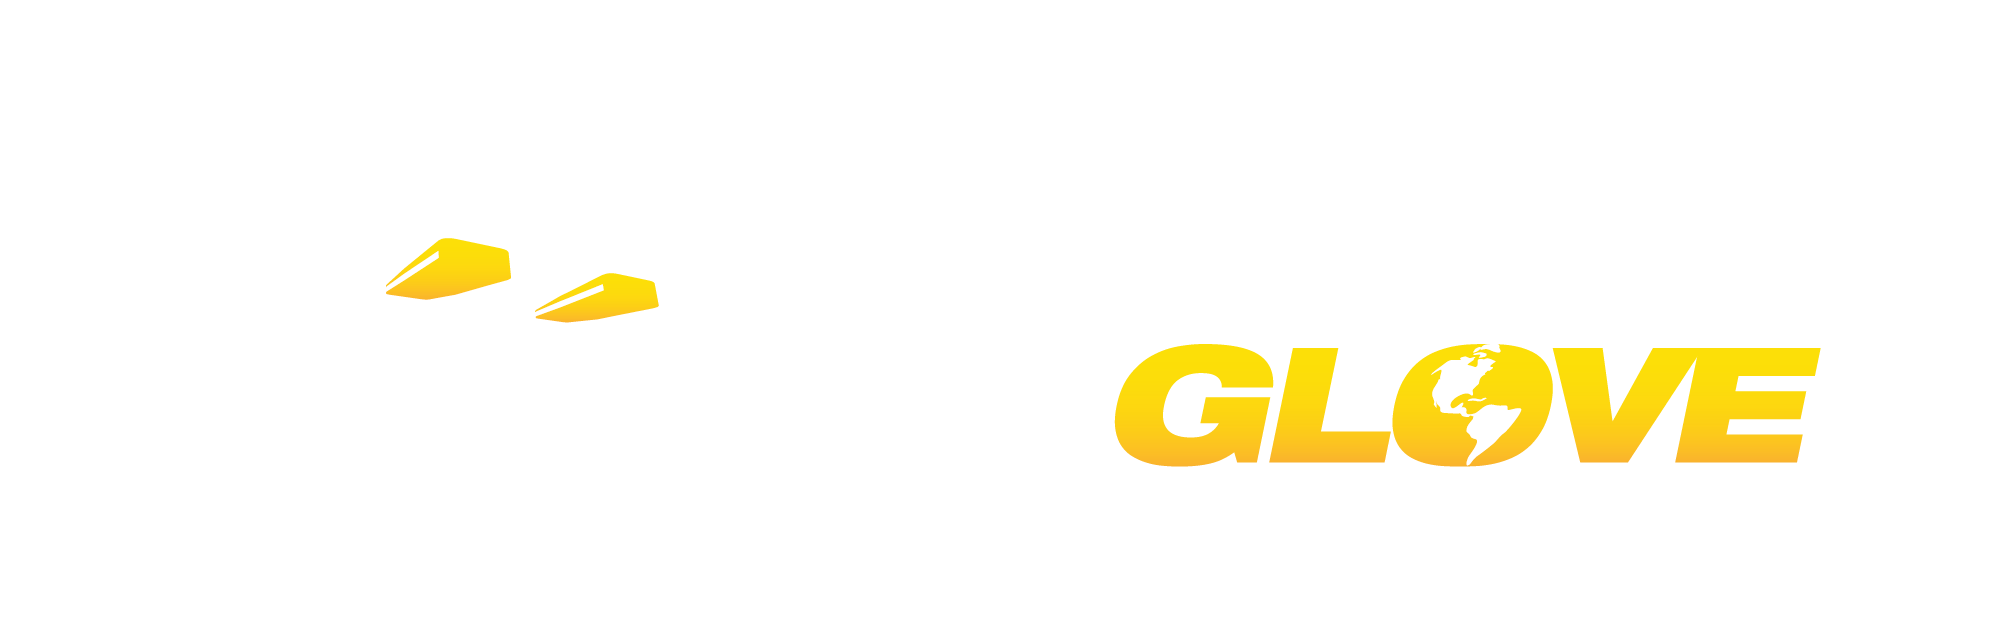 SUMOGlove